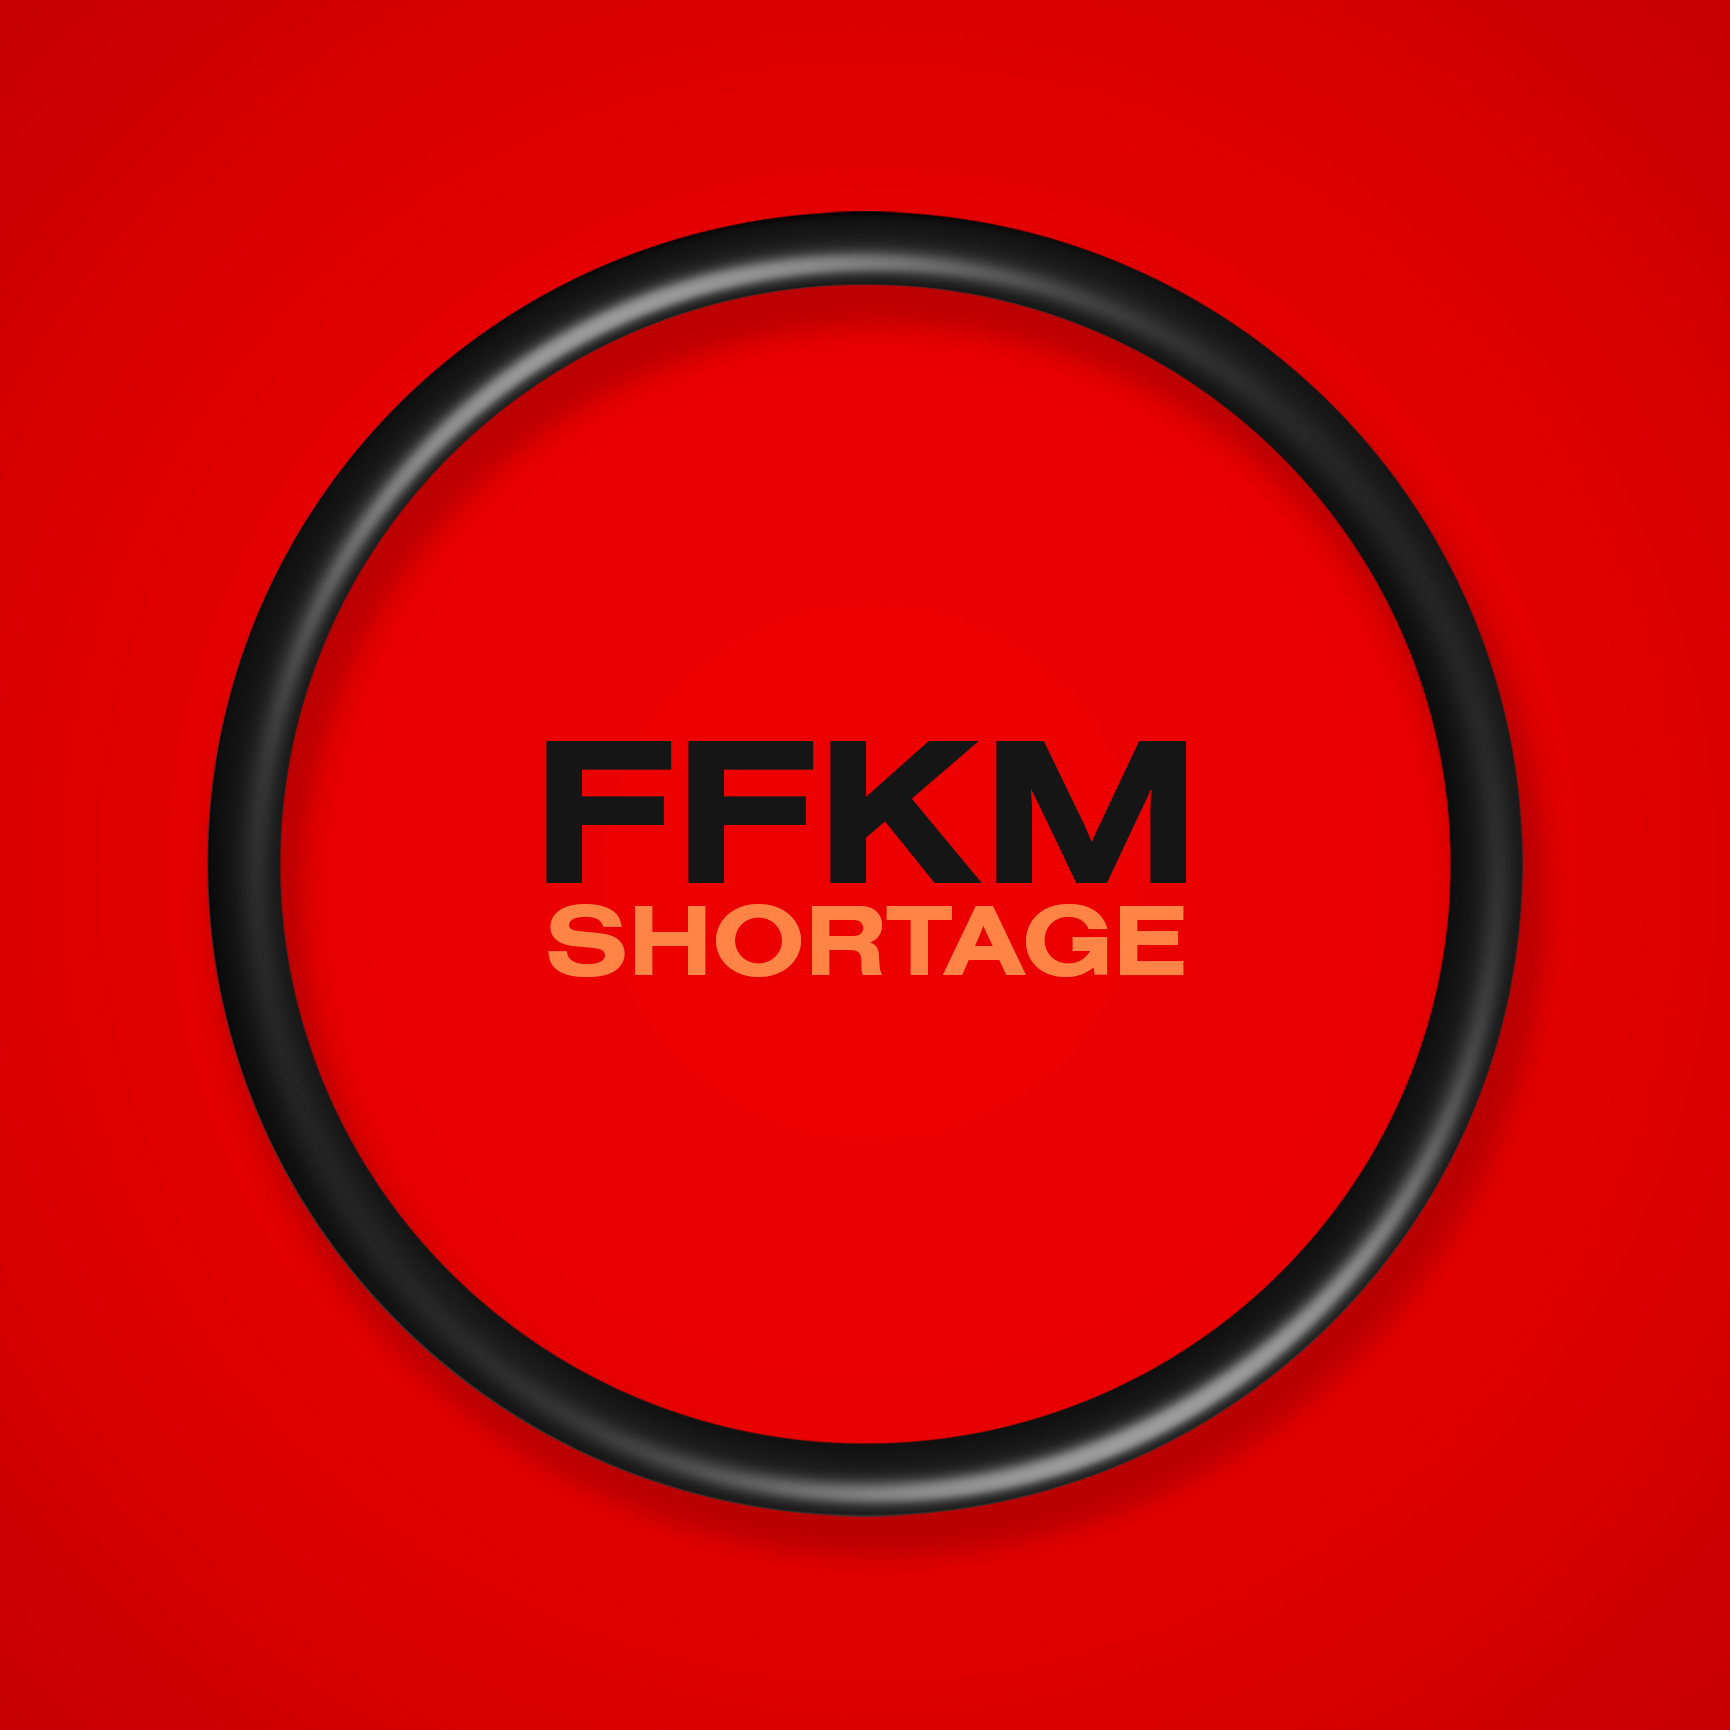 ffkm shortage